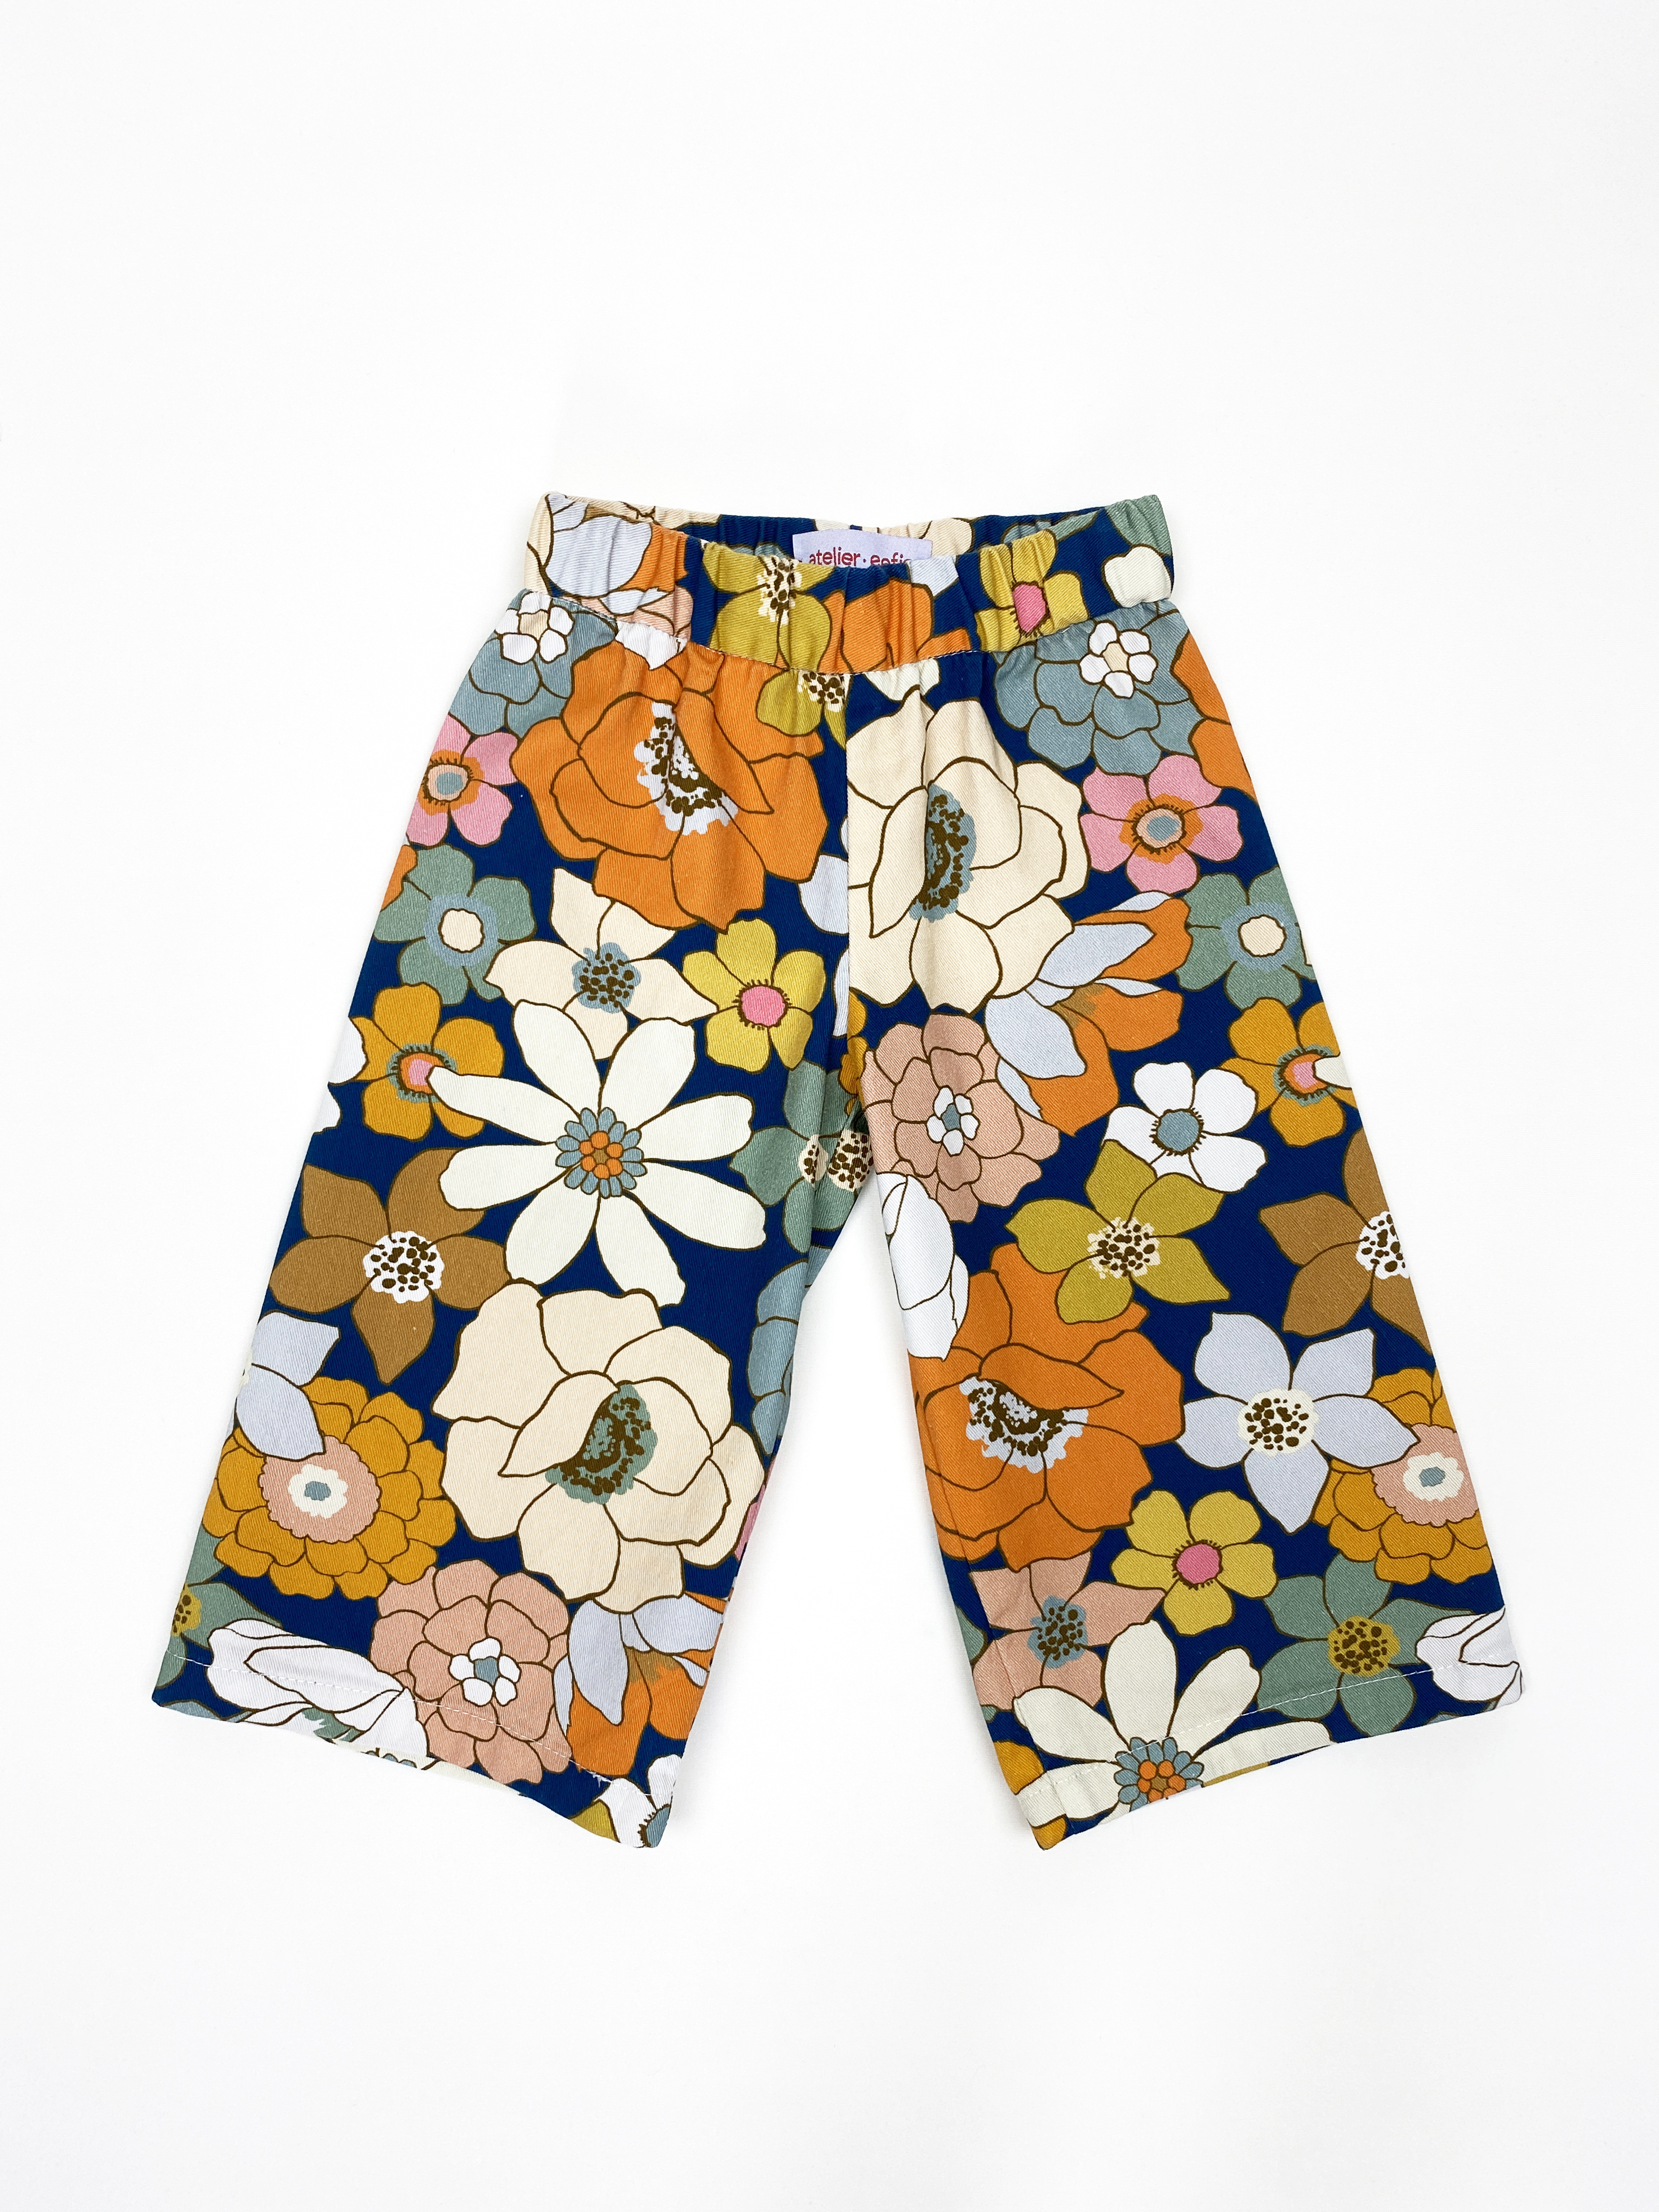 QZH.DUAO Floral Printed Casual Pants Slim Fit Flower Trousers for Men